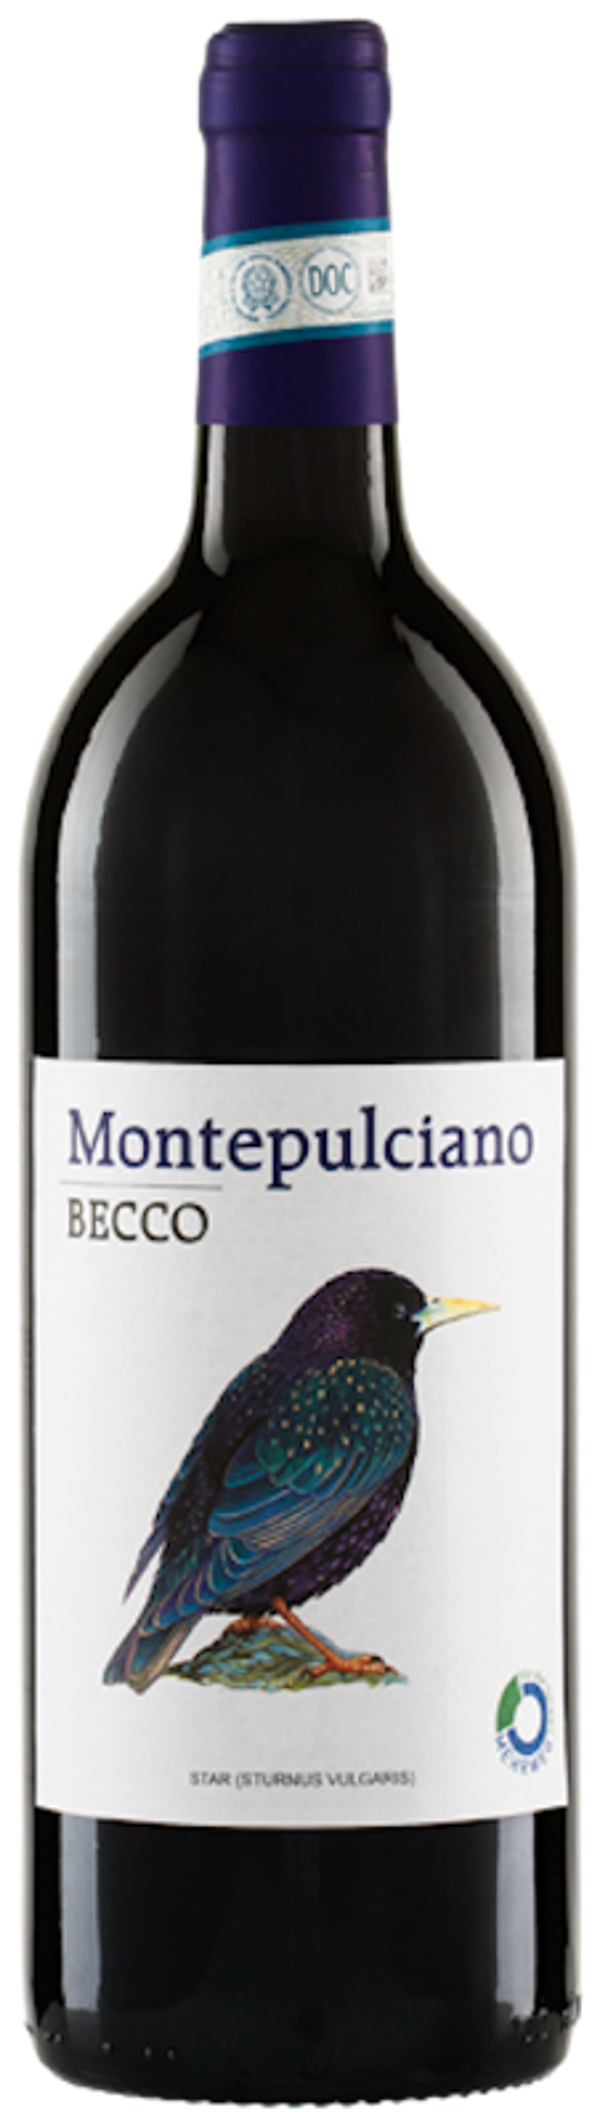 Produktfoto zu BECCO Montepulciano DOC 2021 1